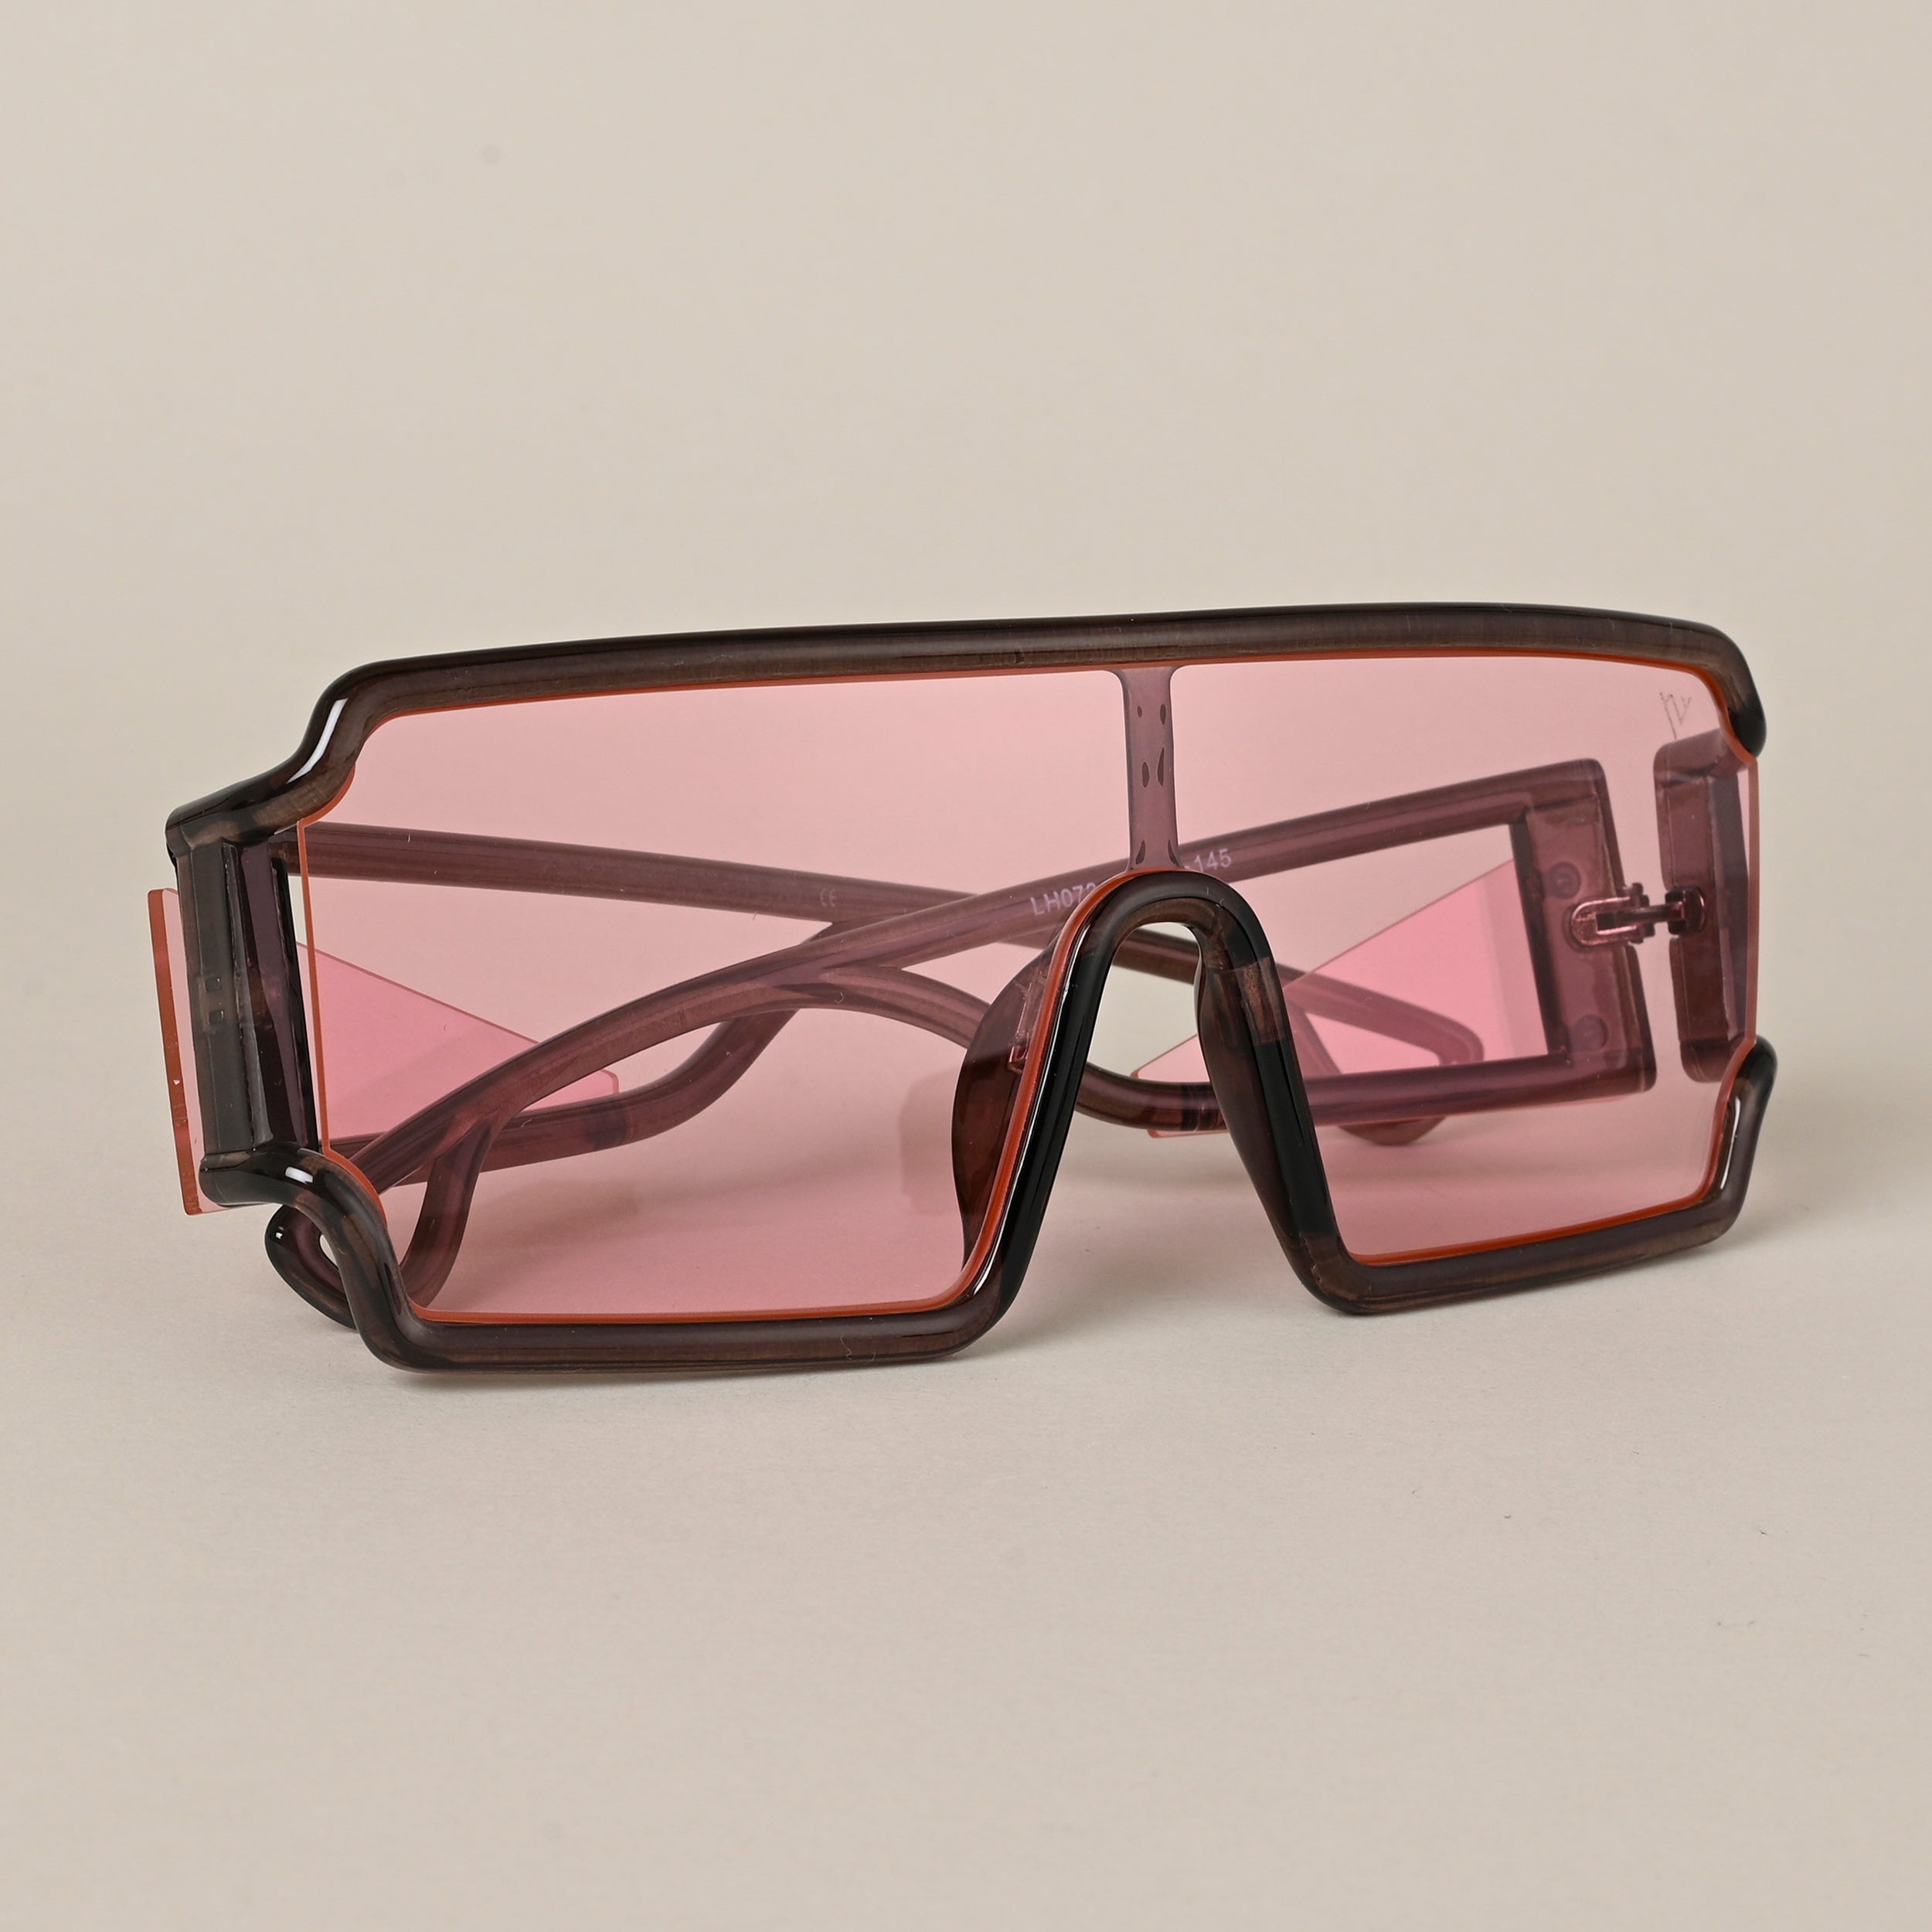 Voyage Brown Wayfarer Sunglasses for Men & Women - MG4560